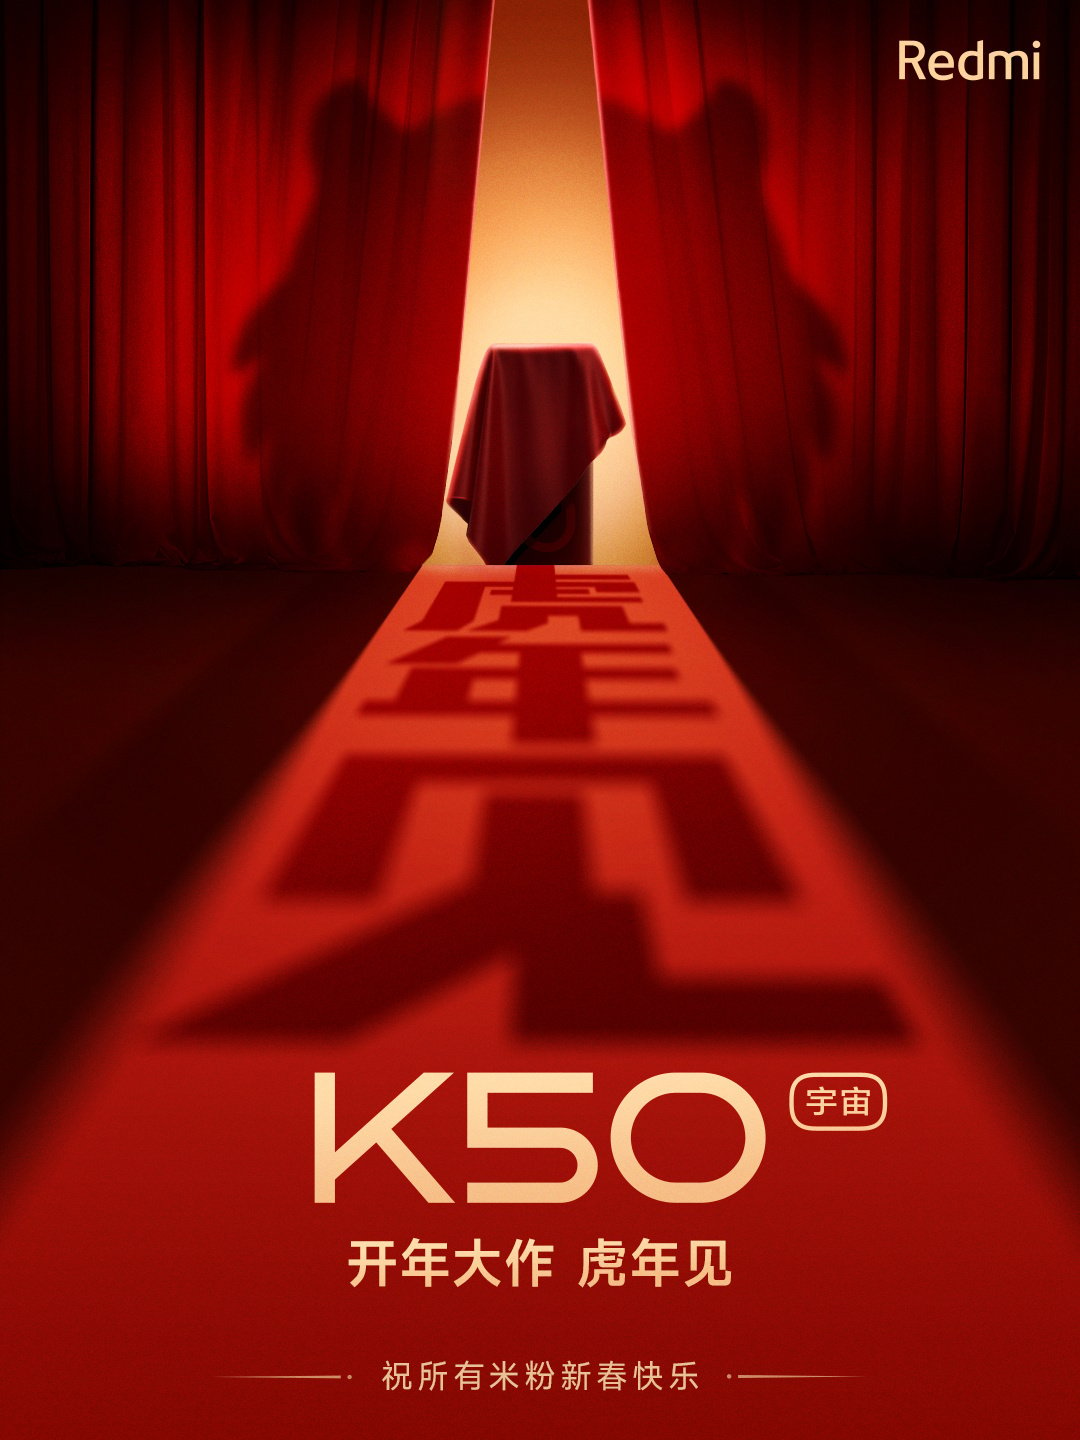 Xiaomi Redmi K50 Teaser